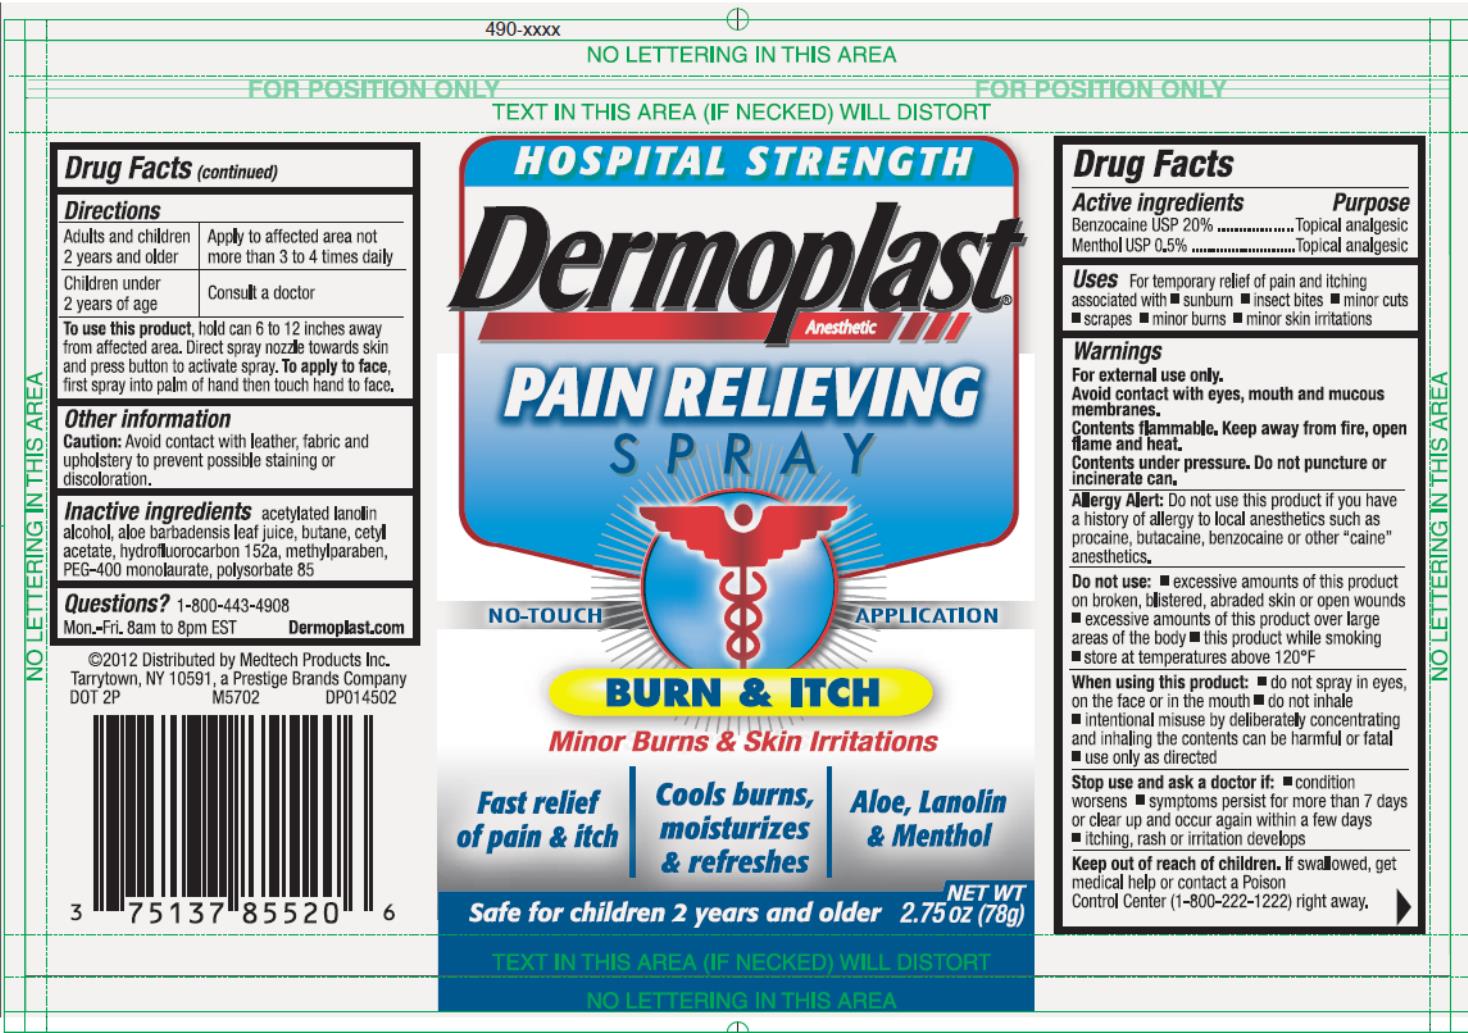 Dermoplast Pain Relieving Spray Burn & Itch Net Wt 2.75 oz (78g)